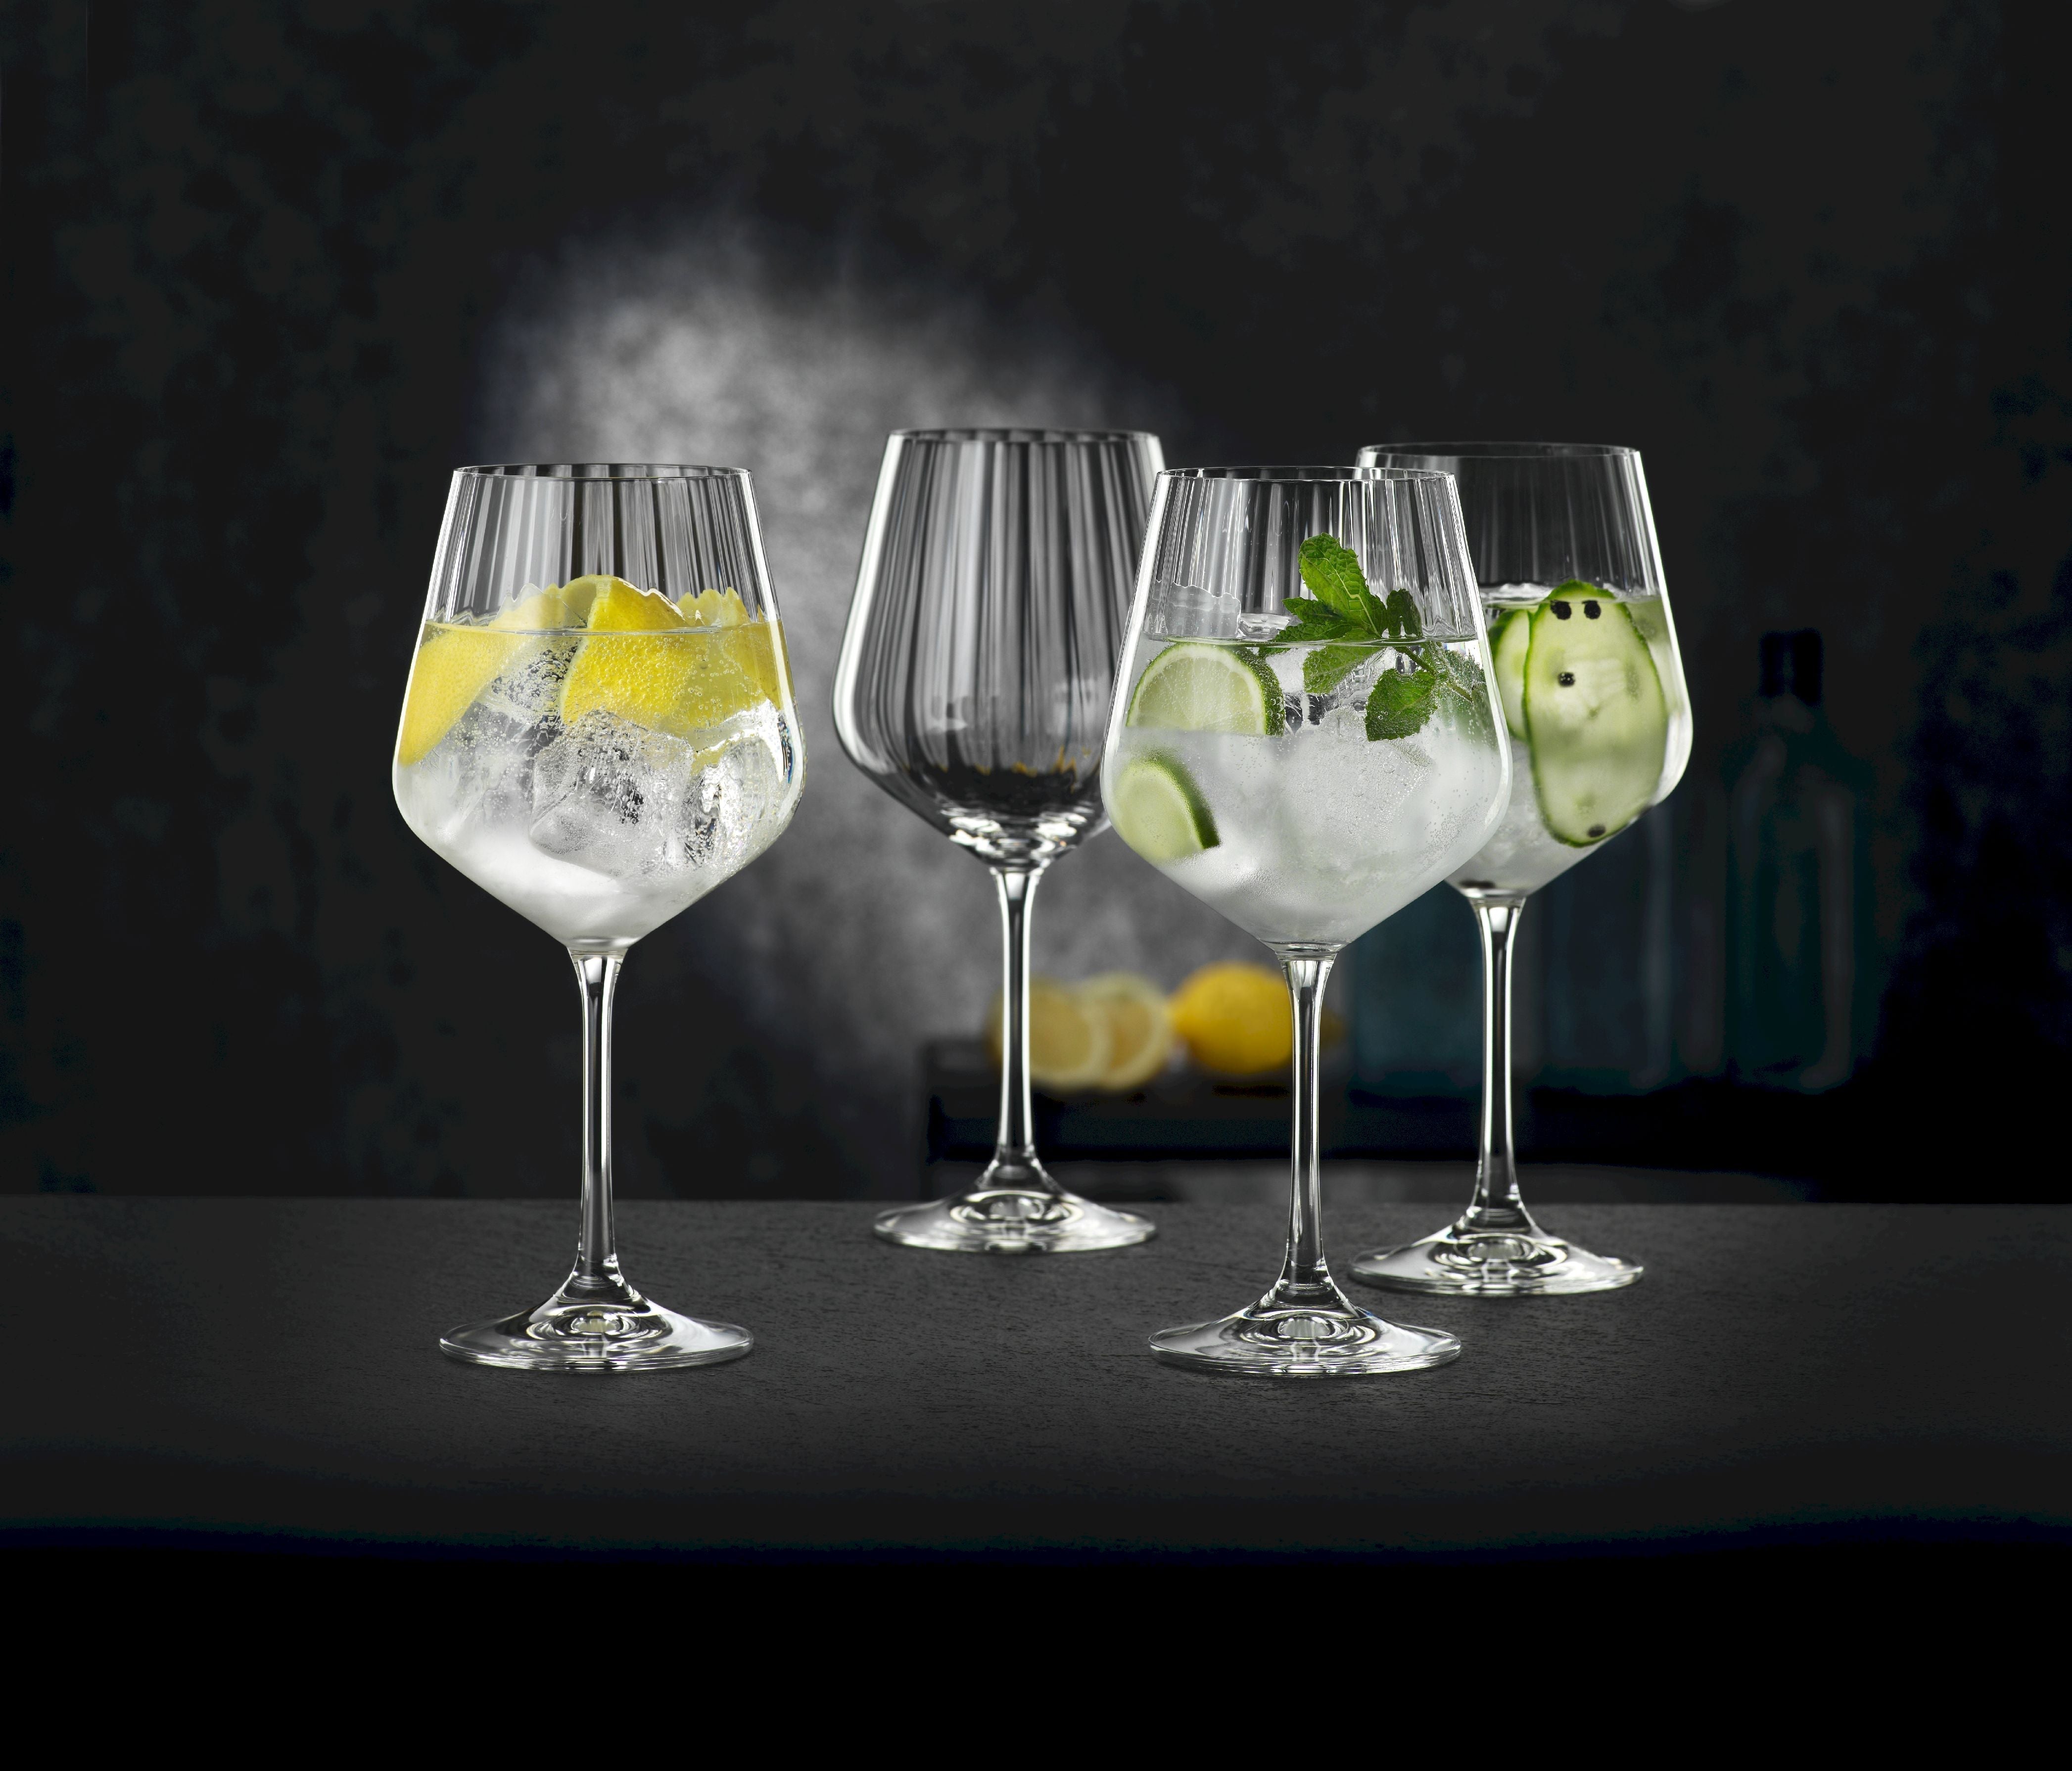 Nachtmann Gin & Tonic Glass 640 ml, set van 4